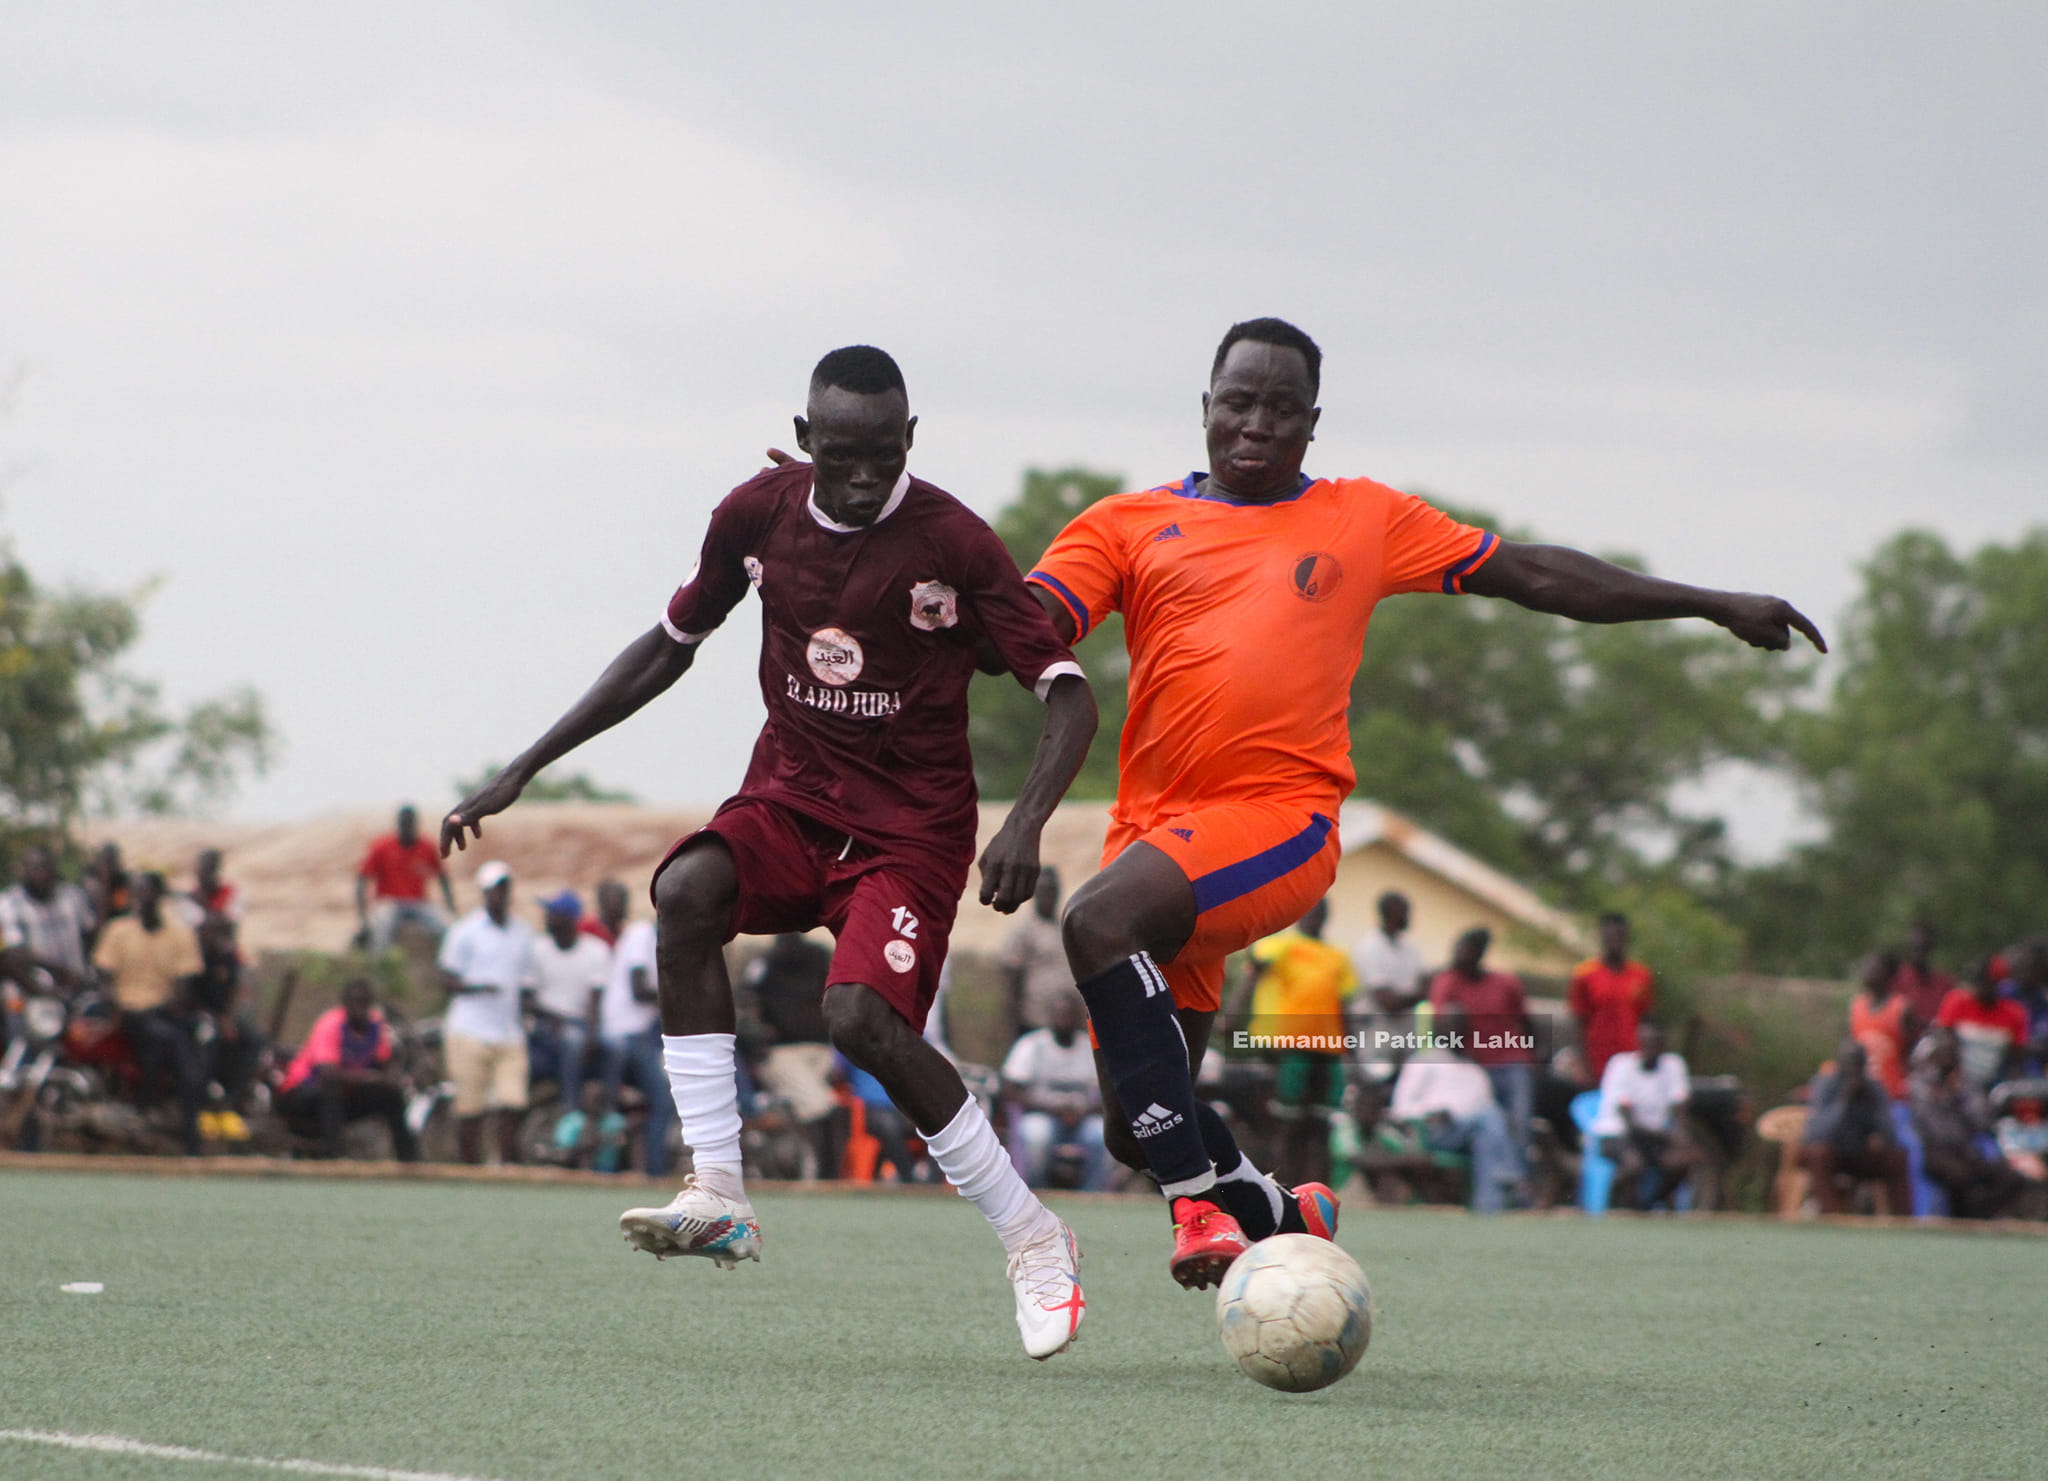 Jamus demolish Al-Shuola 6-0 to reach South Sudan cup semis